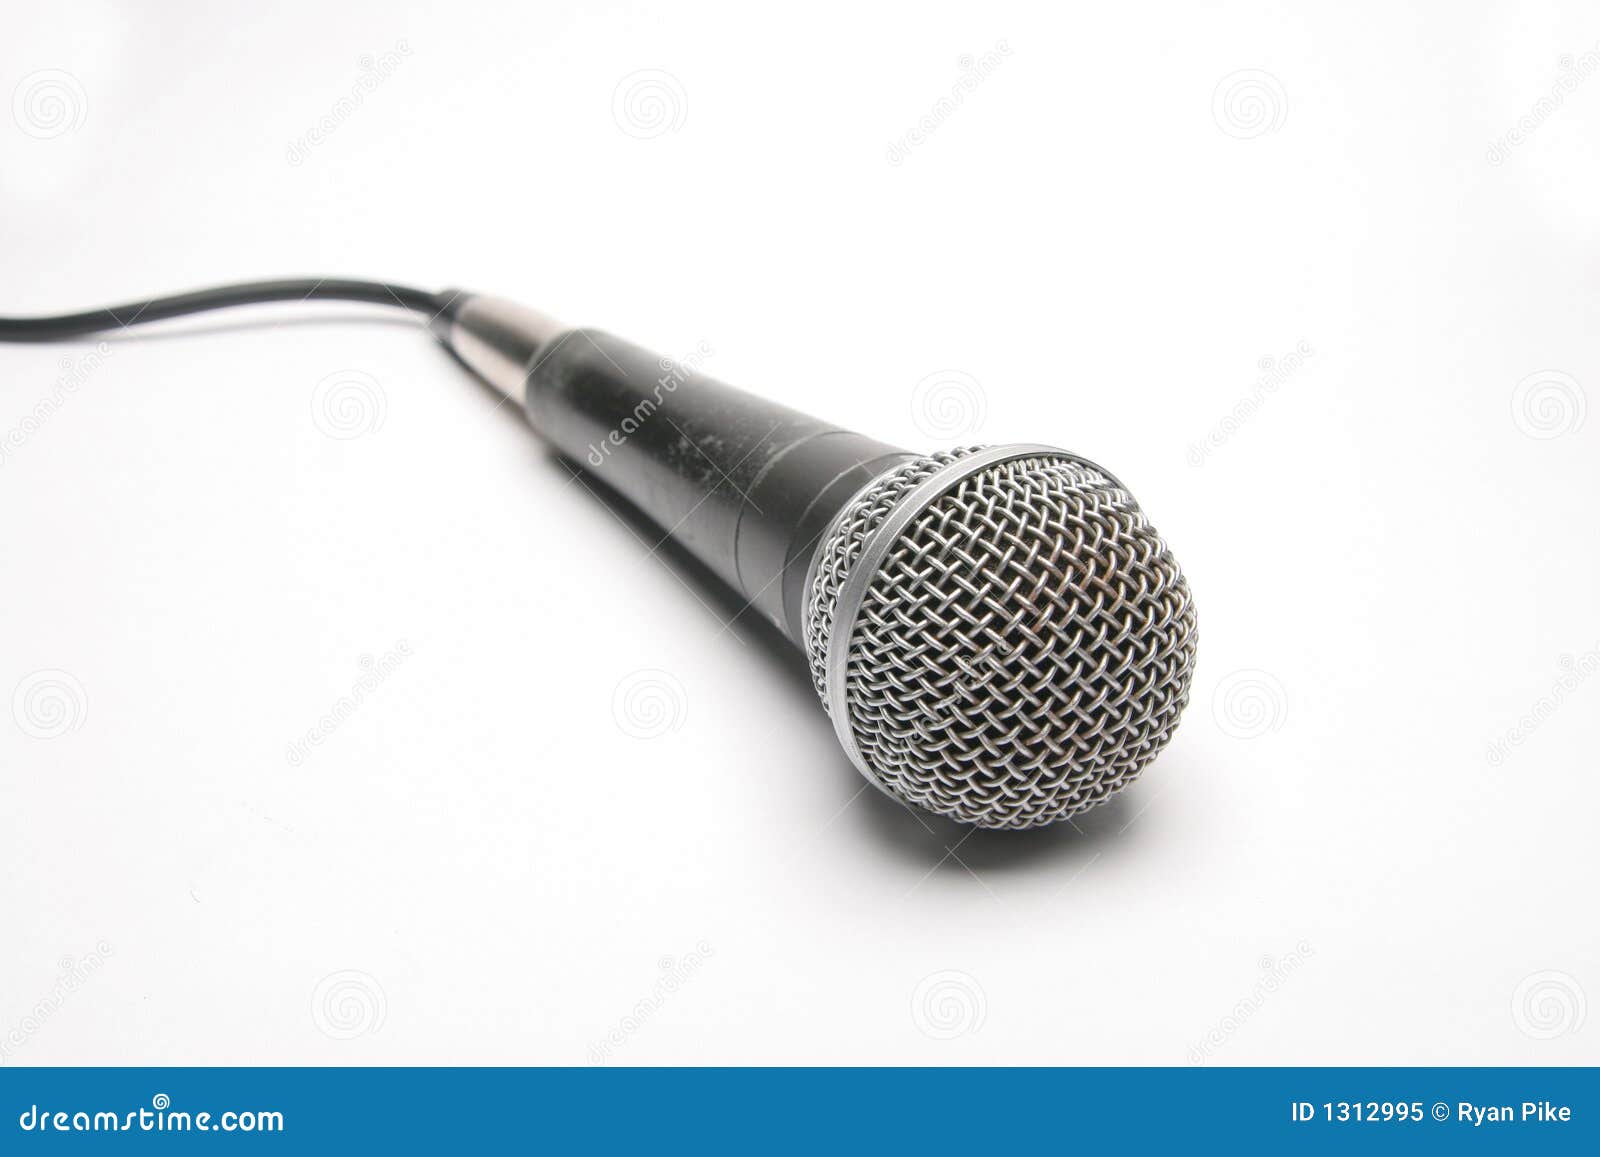  microphone